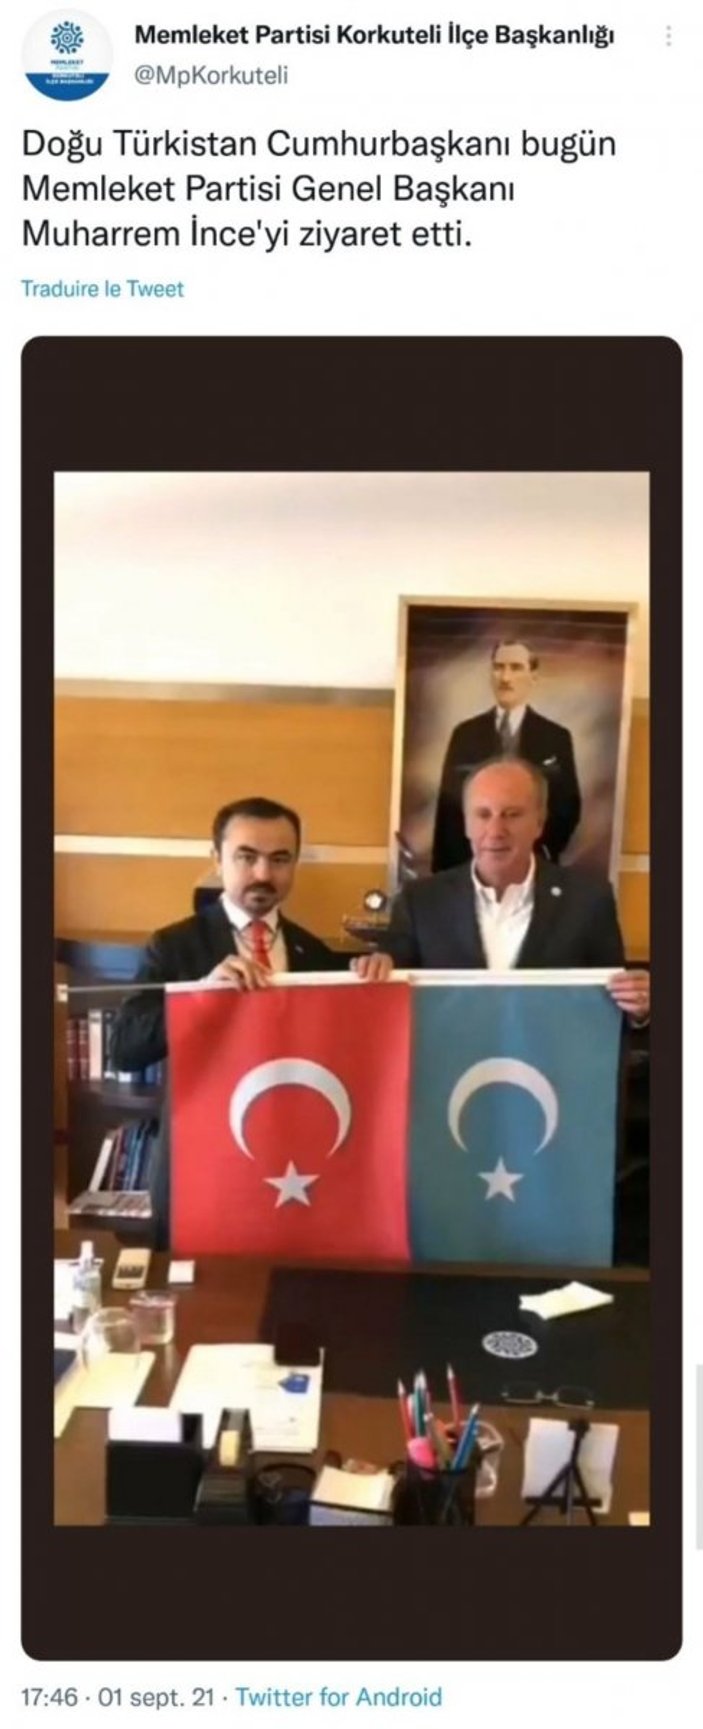 Ankara’da sahte cumhurbaşkanı skandalı